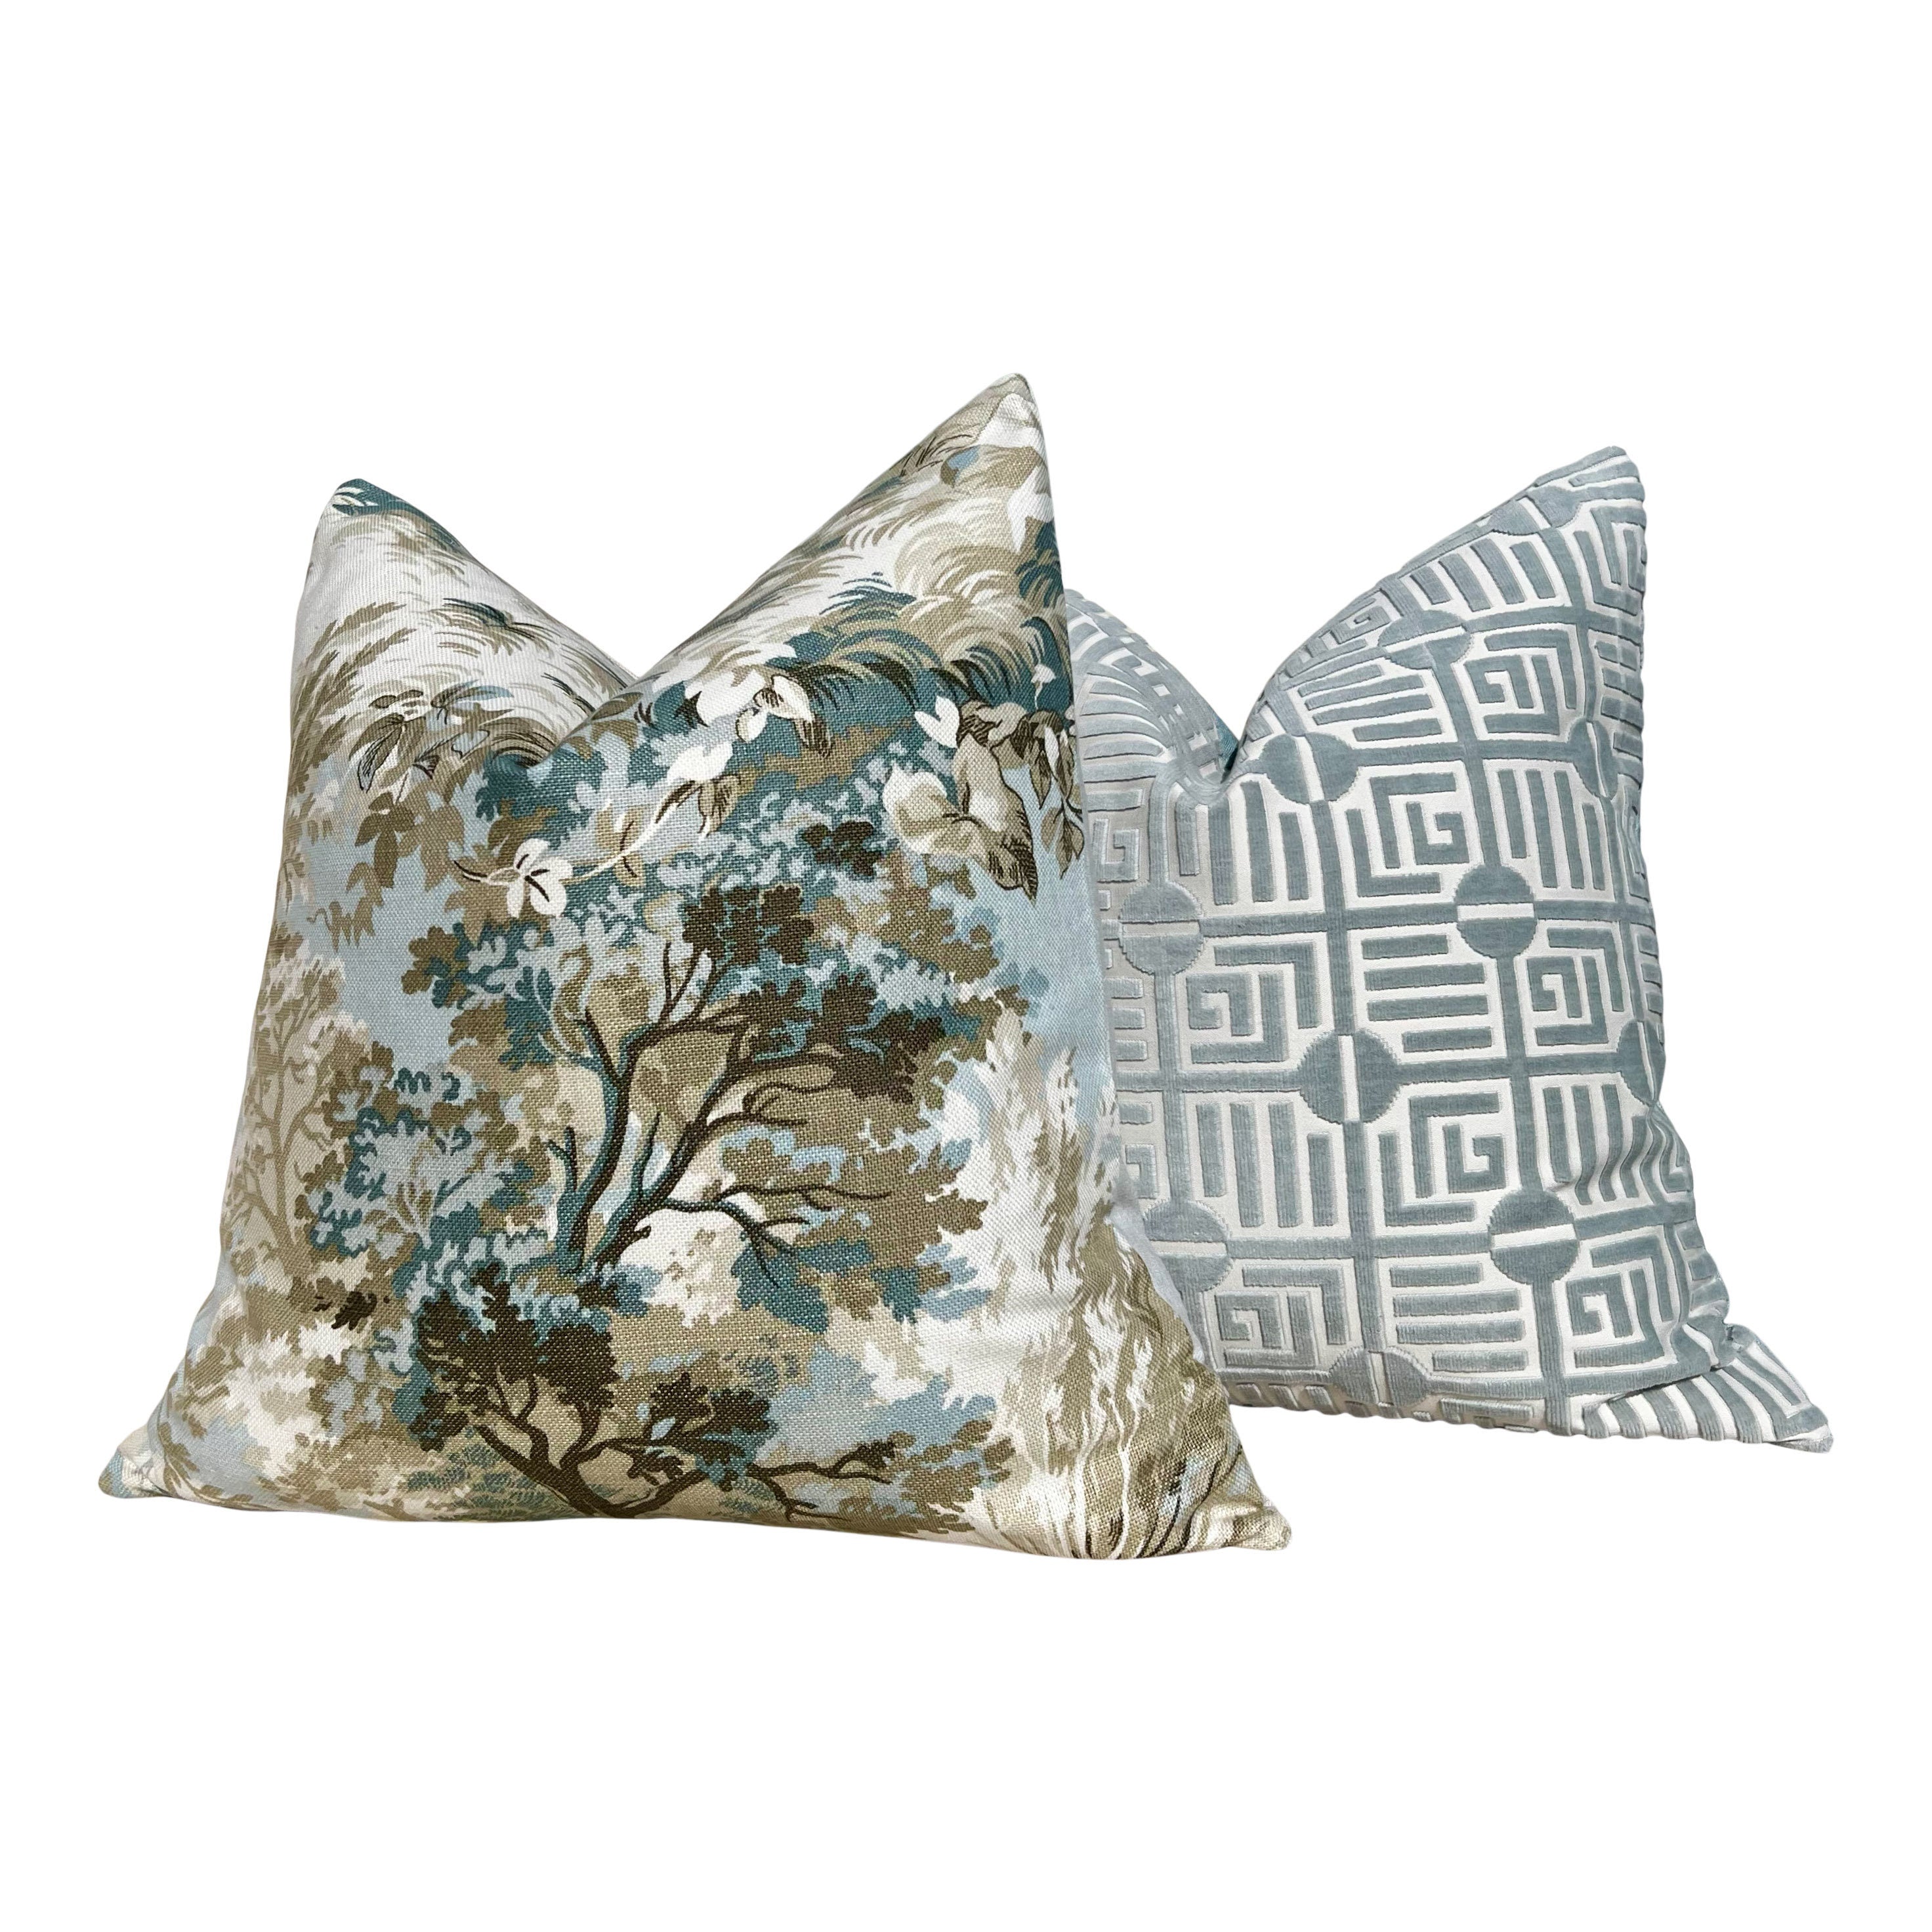 Lincoln Pillow in Beige and Spa Blue. Designer Pillows, High End Botanical Pillow Covers, Accent Aqua Blue Pillow Case, Euro Sham Pillow